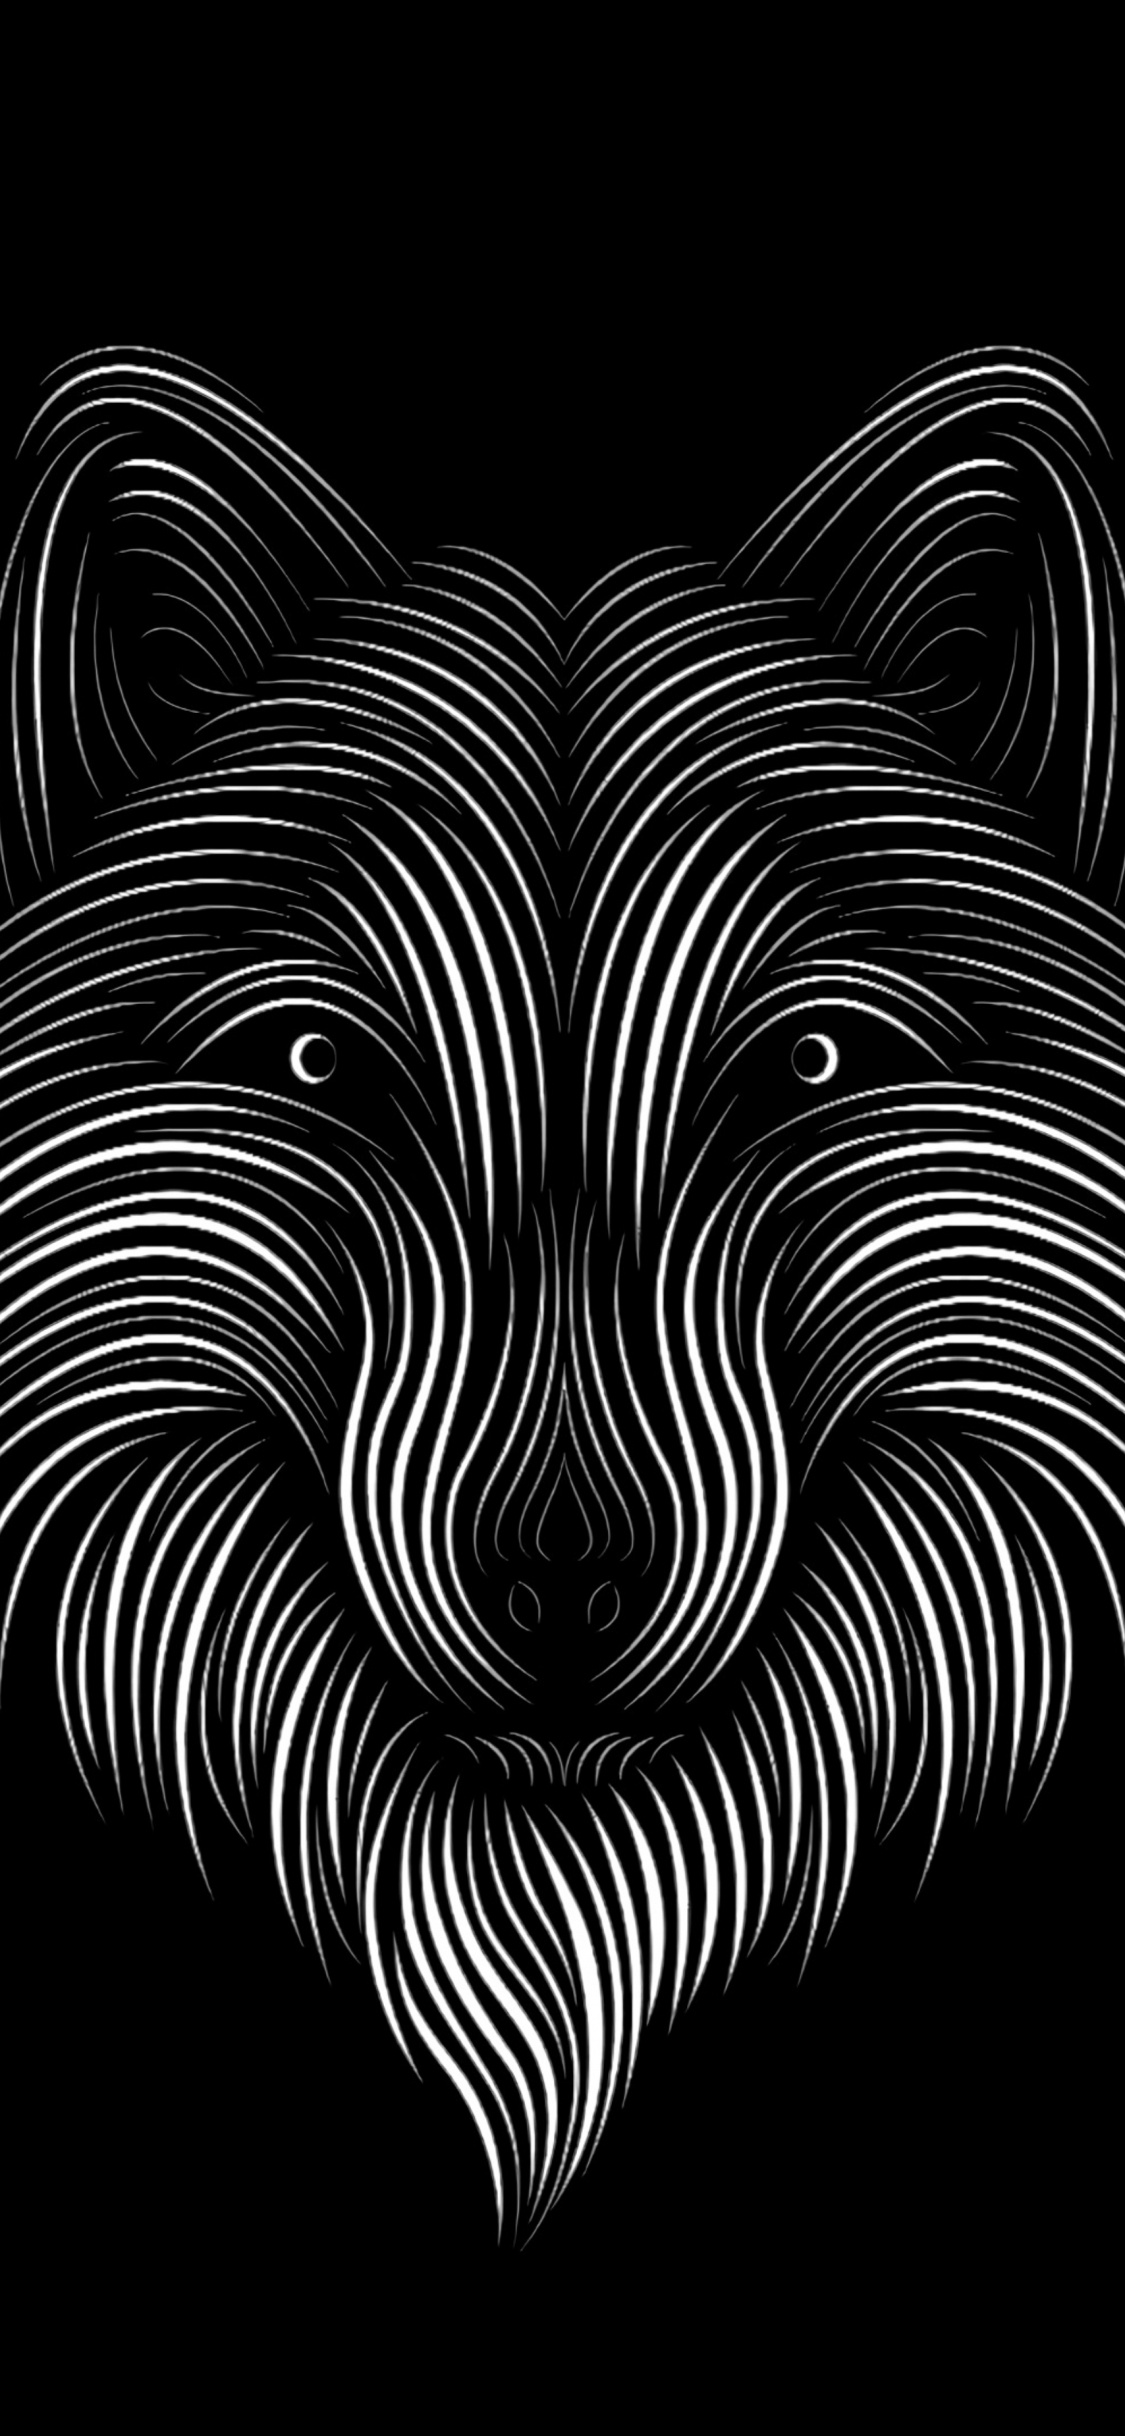 Black and White Zebra Illustration. Wallpaper in 1125x2436 Resolution